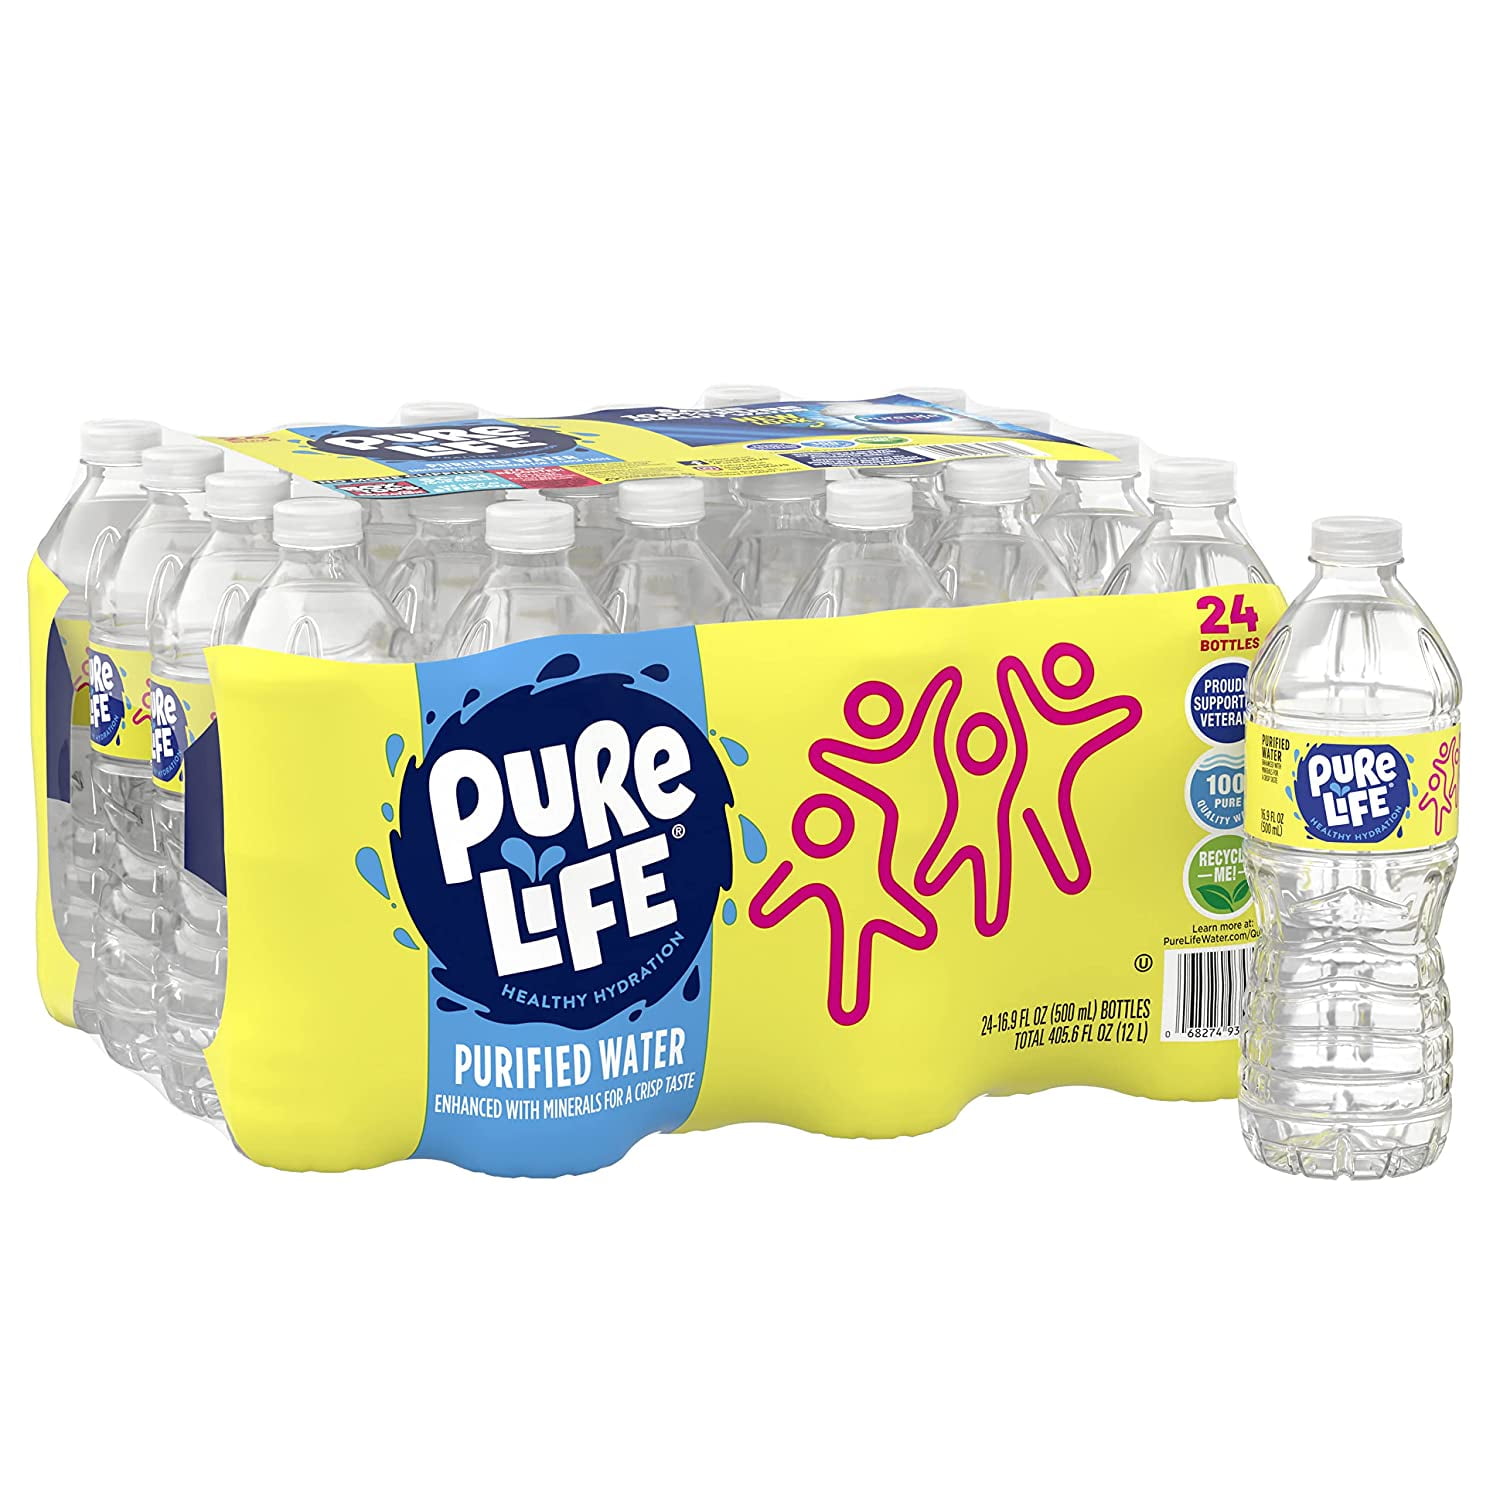 Pure Life Drinking Water, ,5 Liter Bottle, 24-Pack - Princeton, MN